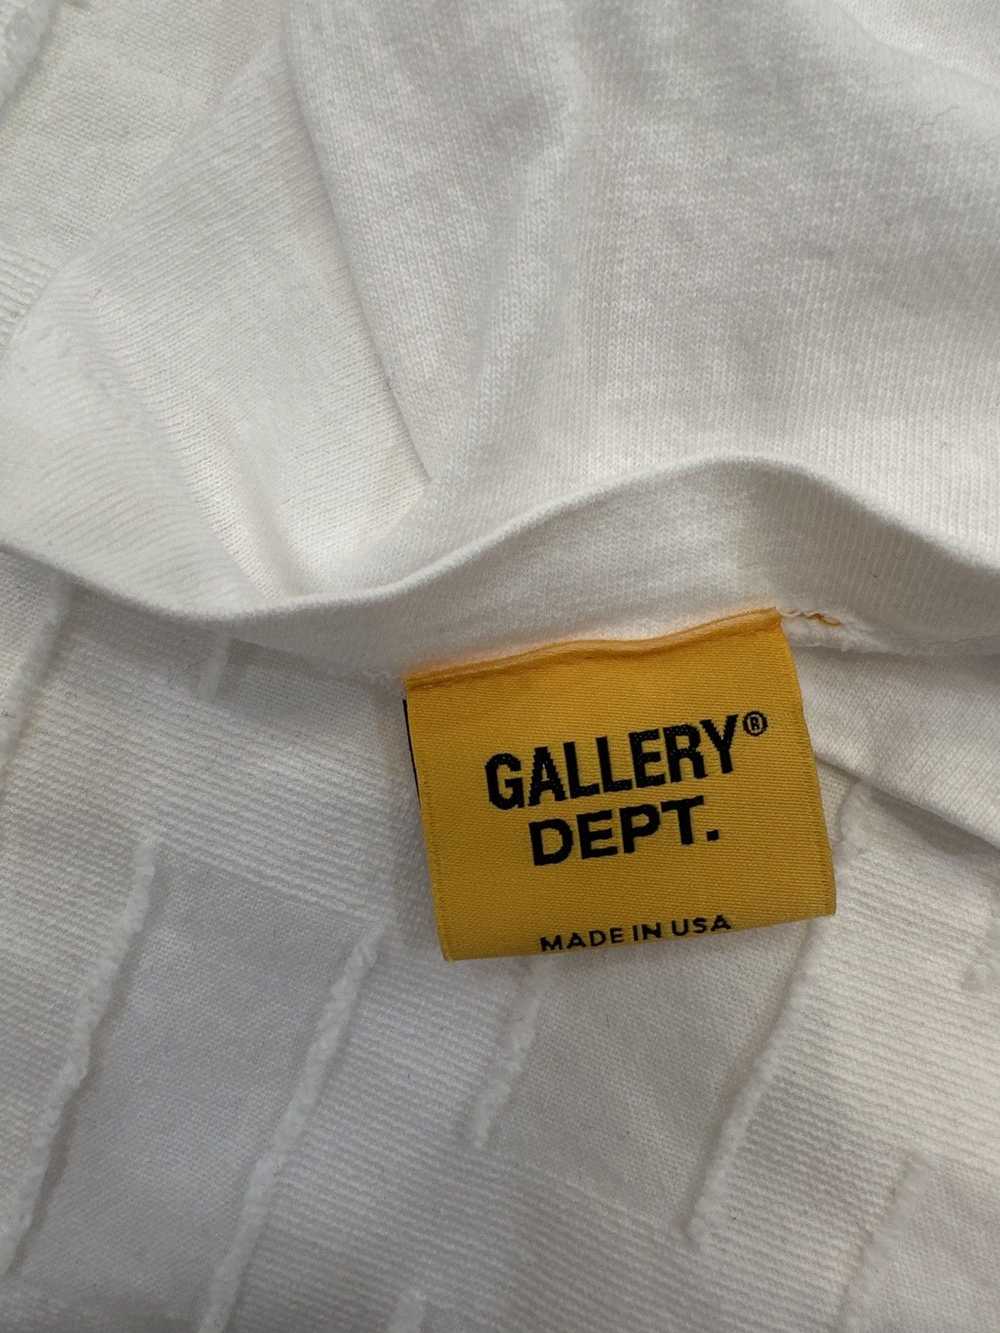 Gallery Dept. Gallery dept t shirt - image 5